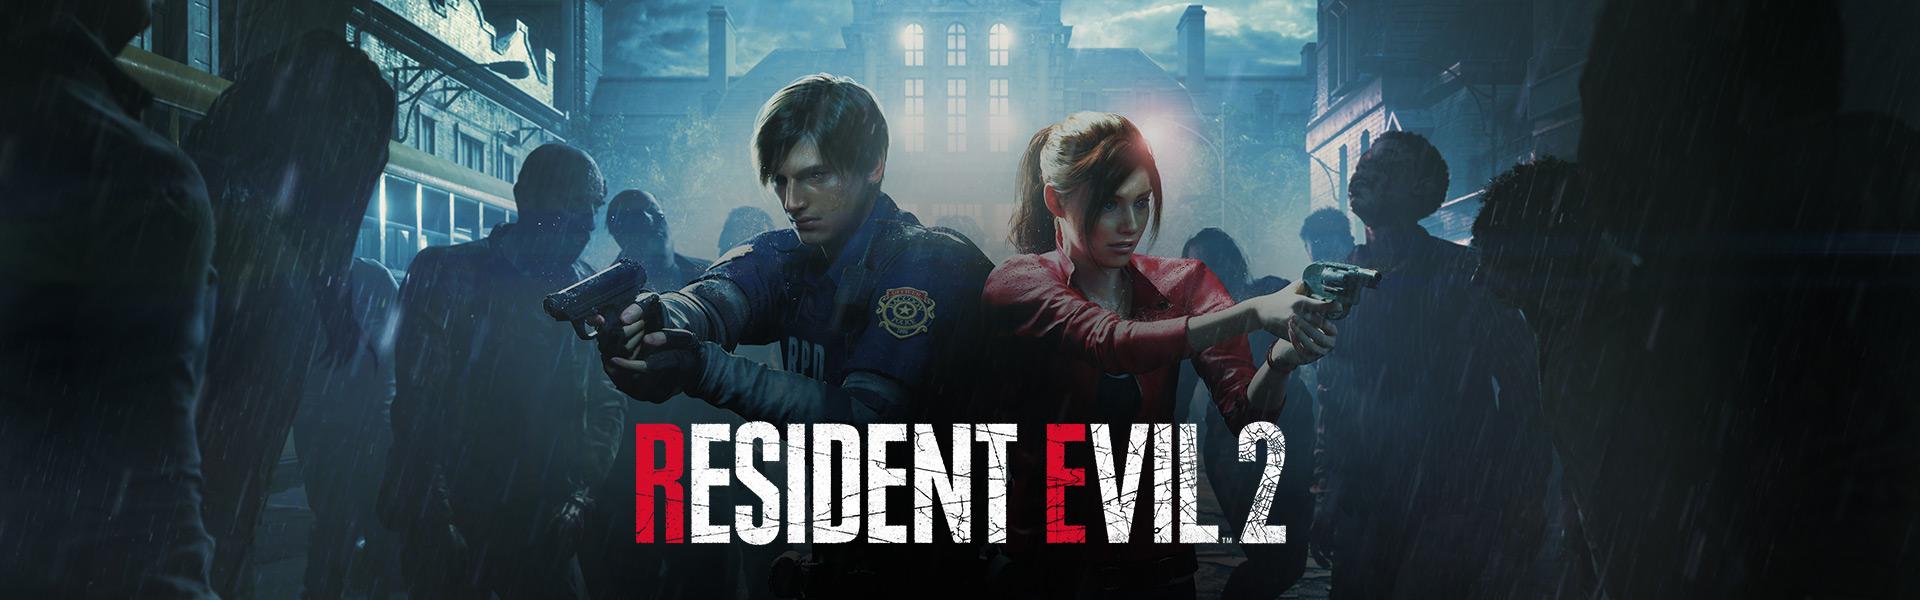 Resident Evil 2 for Xbox One